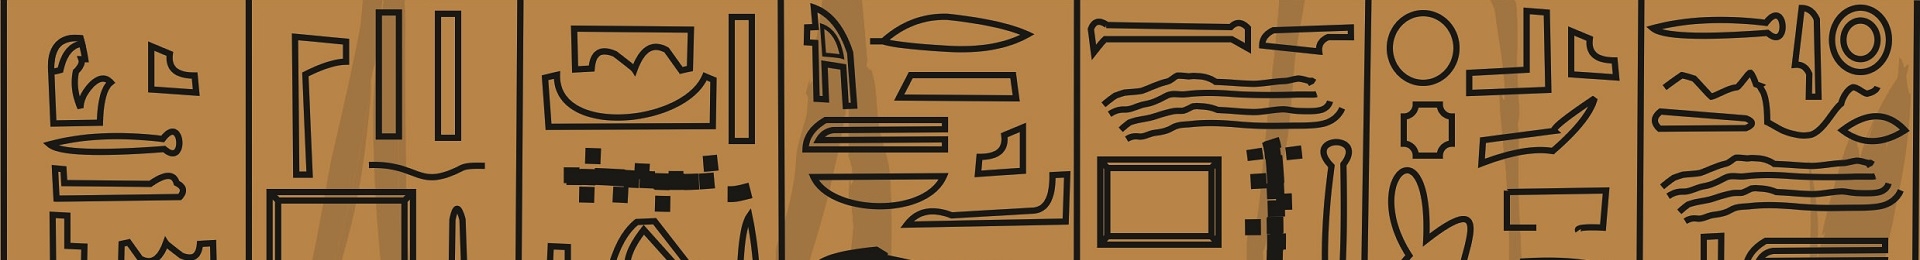 Ancient Egypt banner